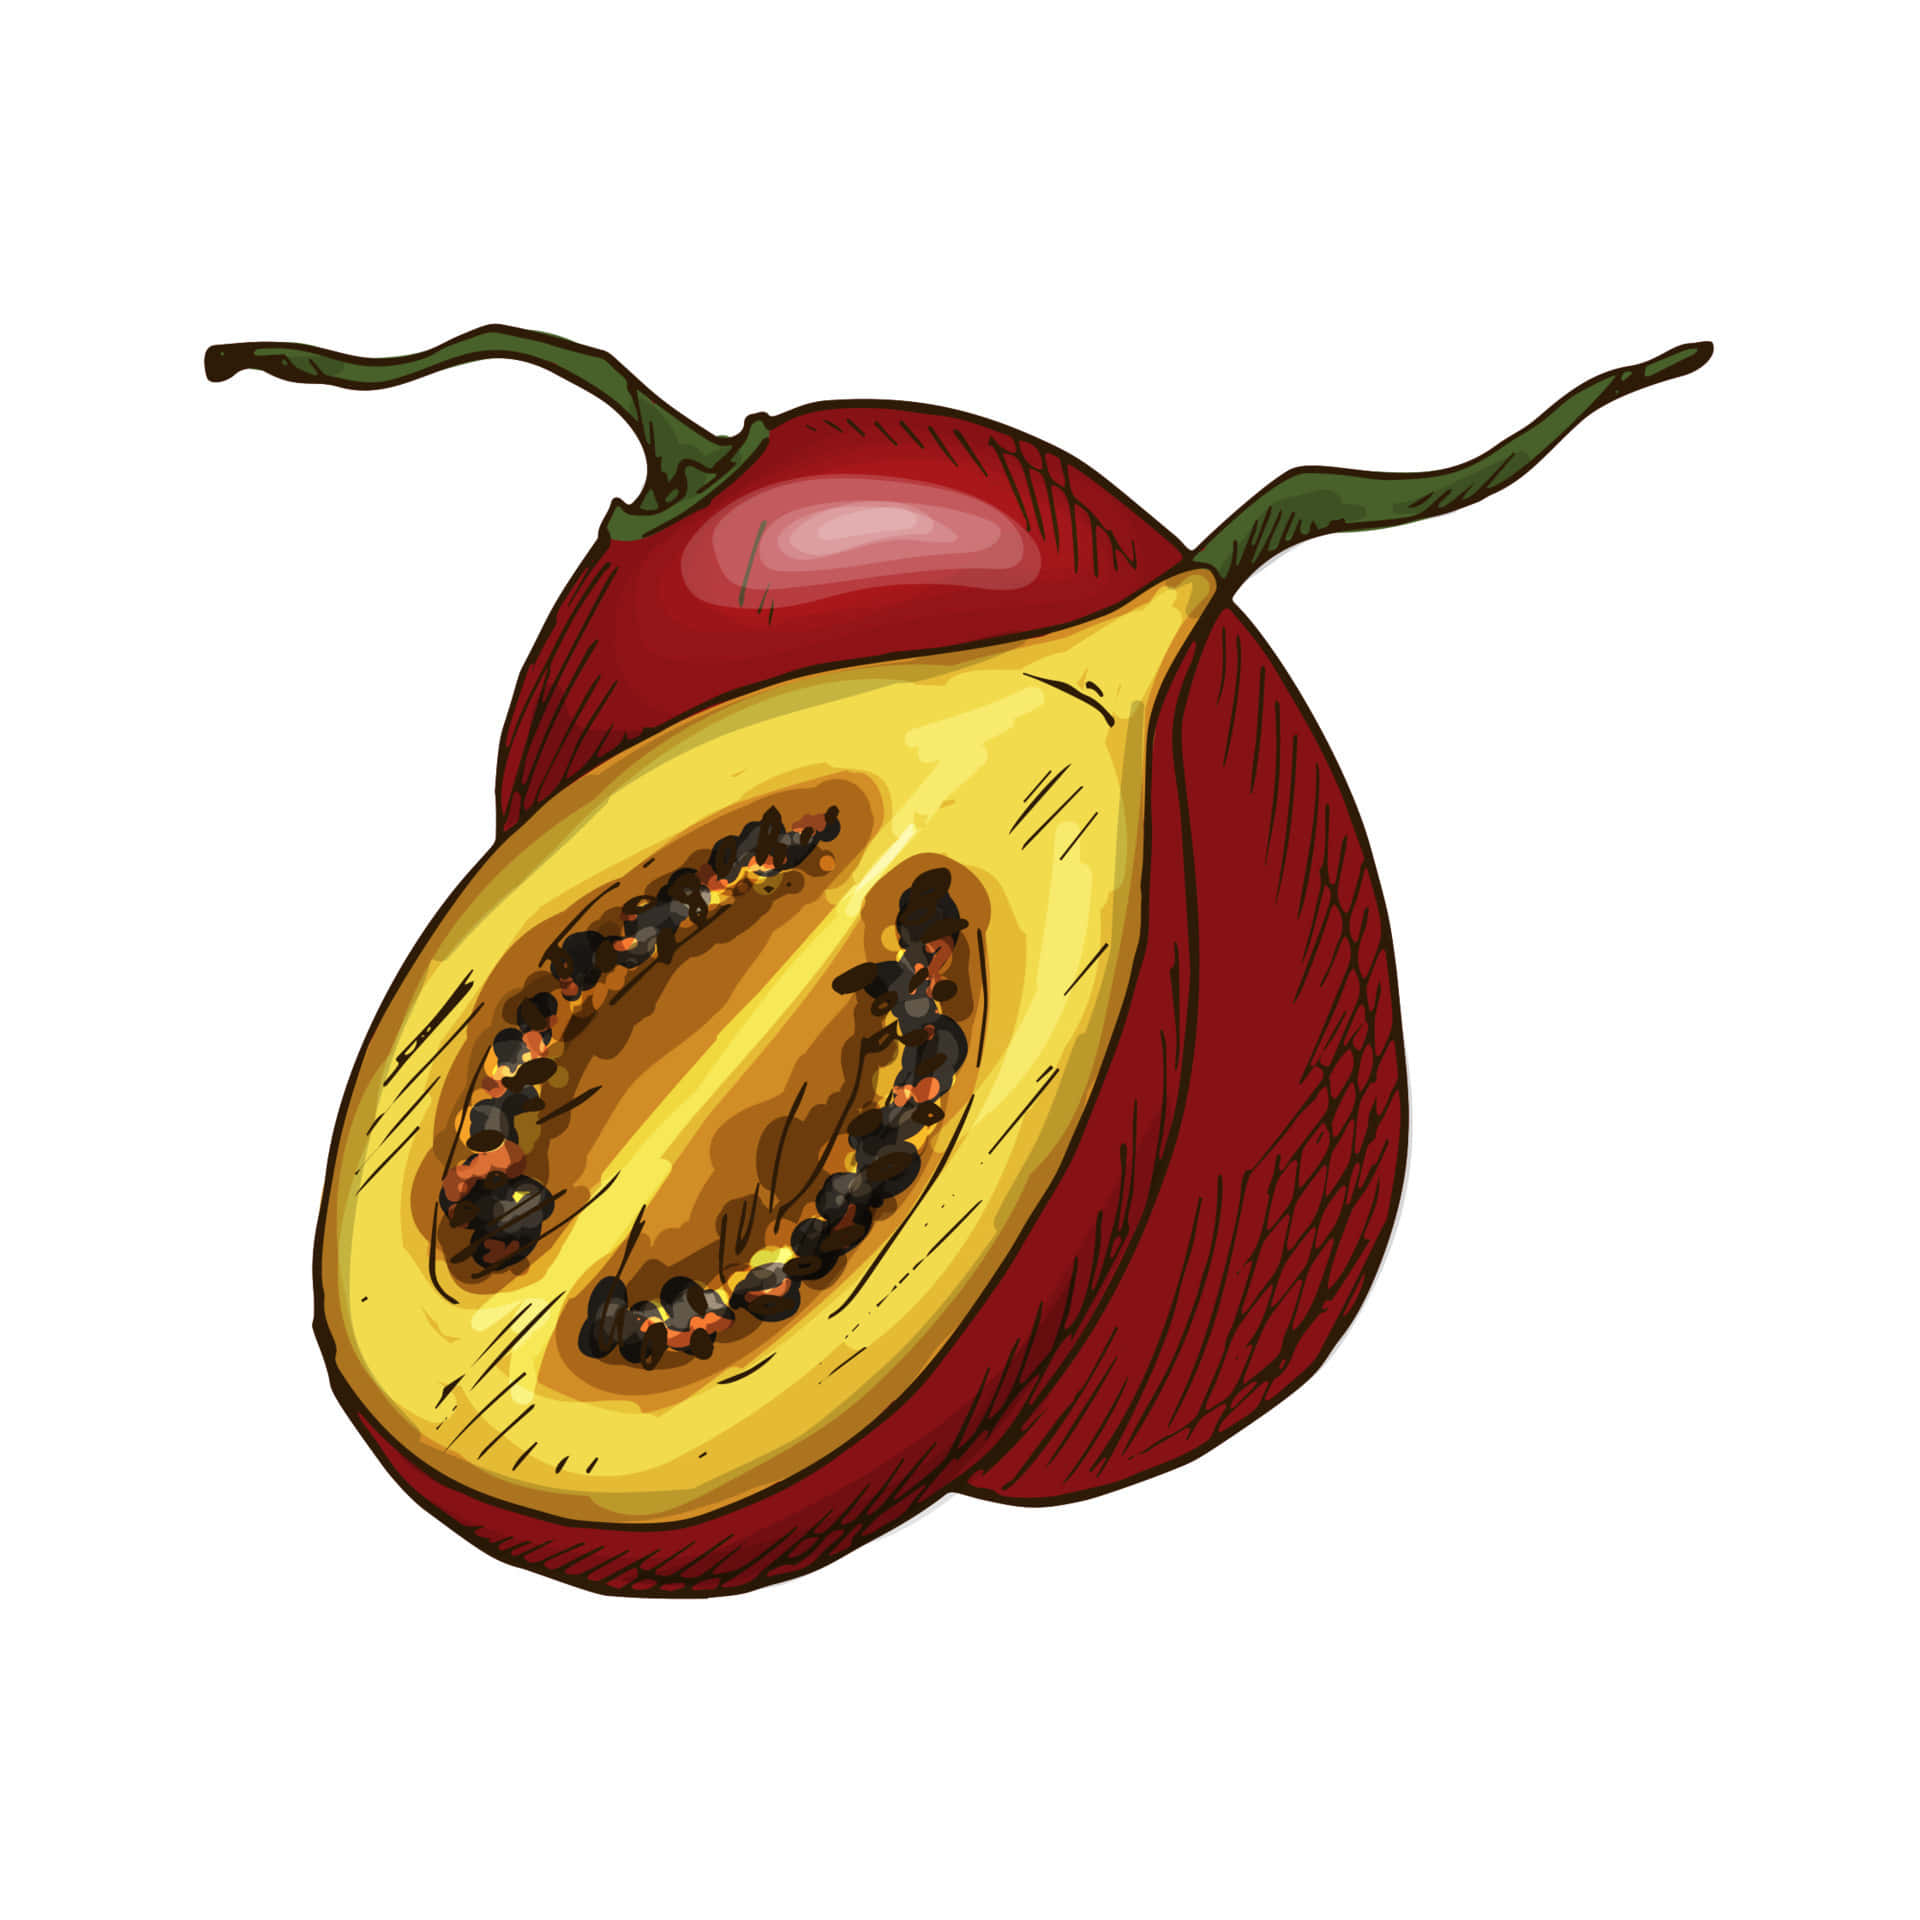 Red Tamarillo Fruit Artistic Illustration Picture